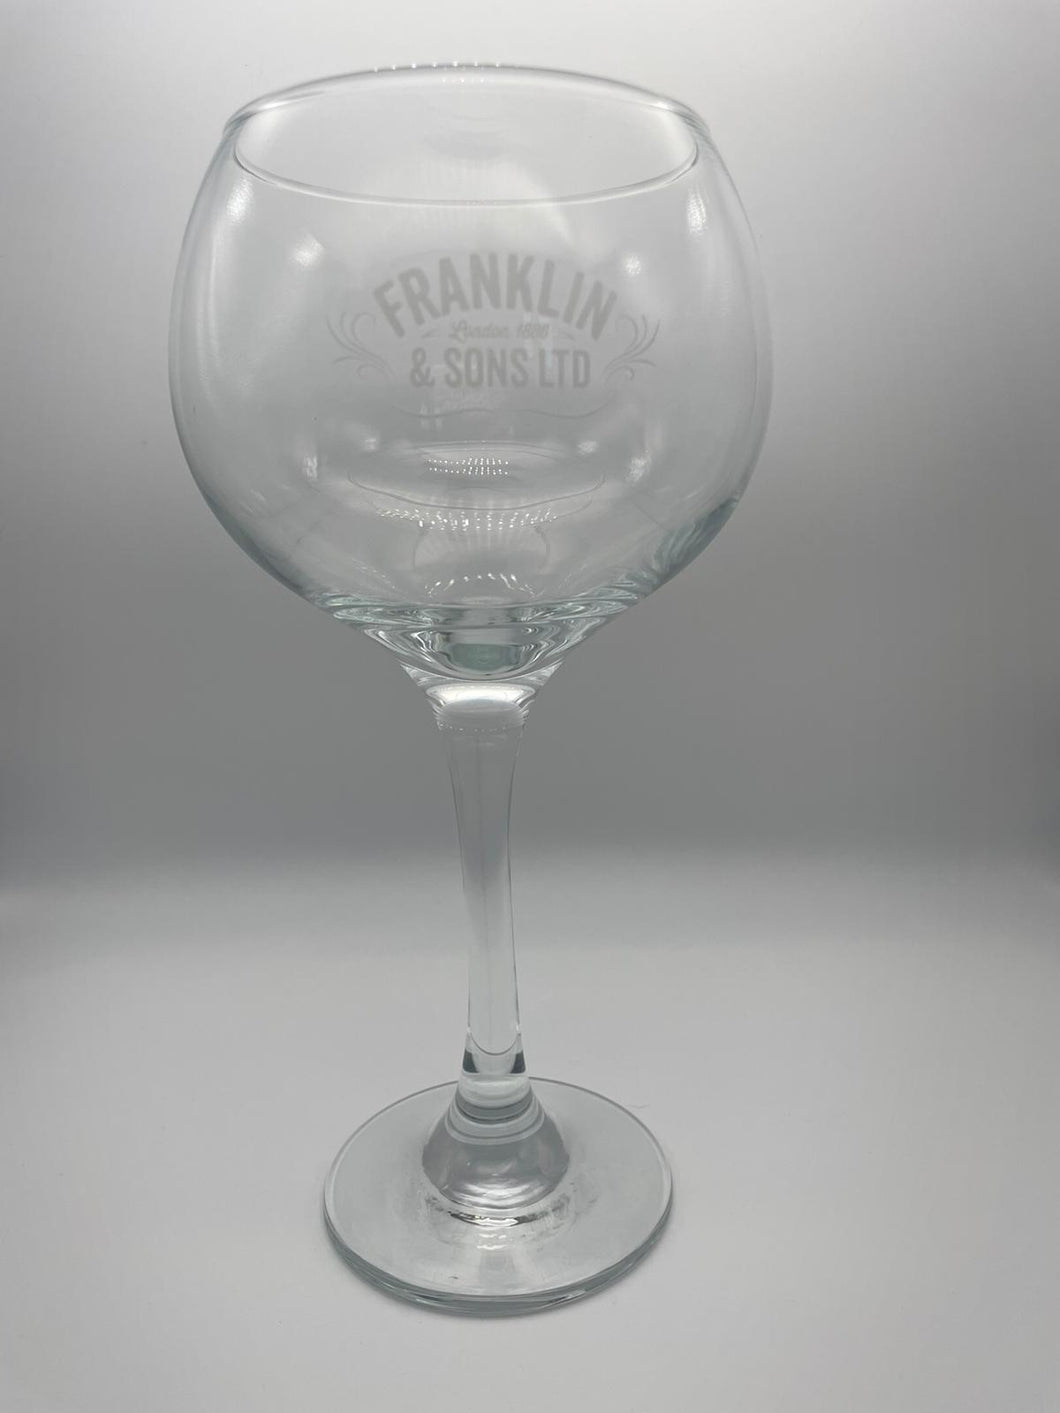 FRANKLIN & SONS Ltd LARGE GIN BALLOON GLASS